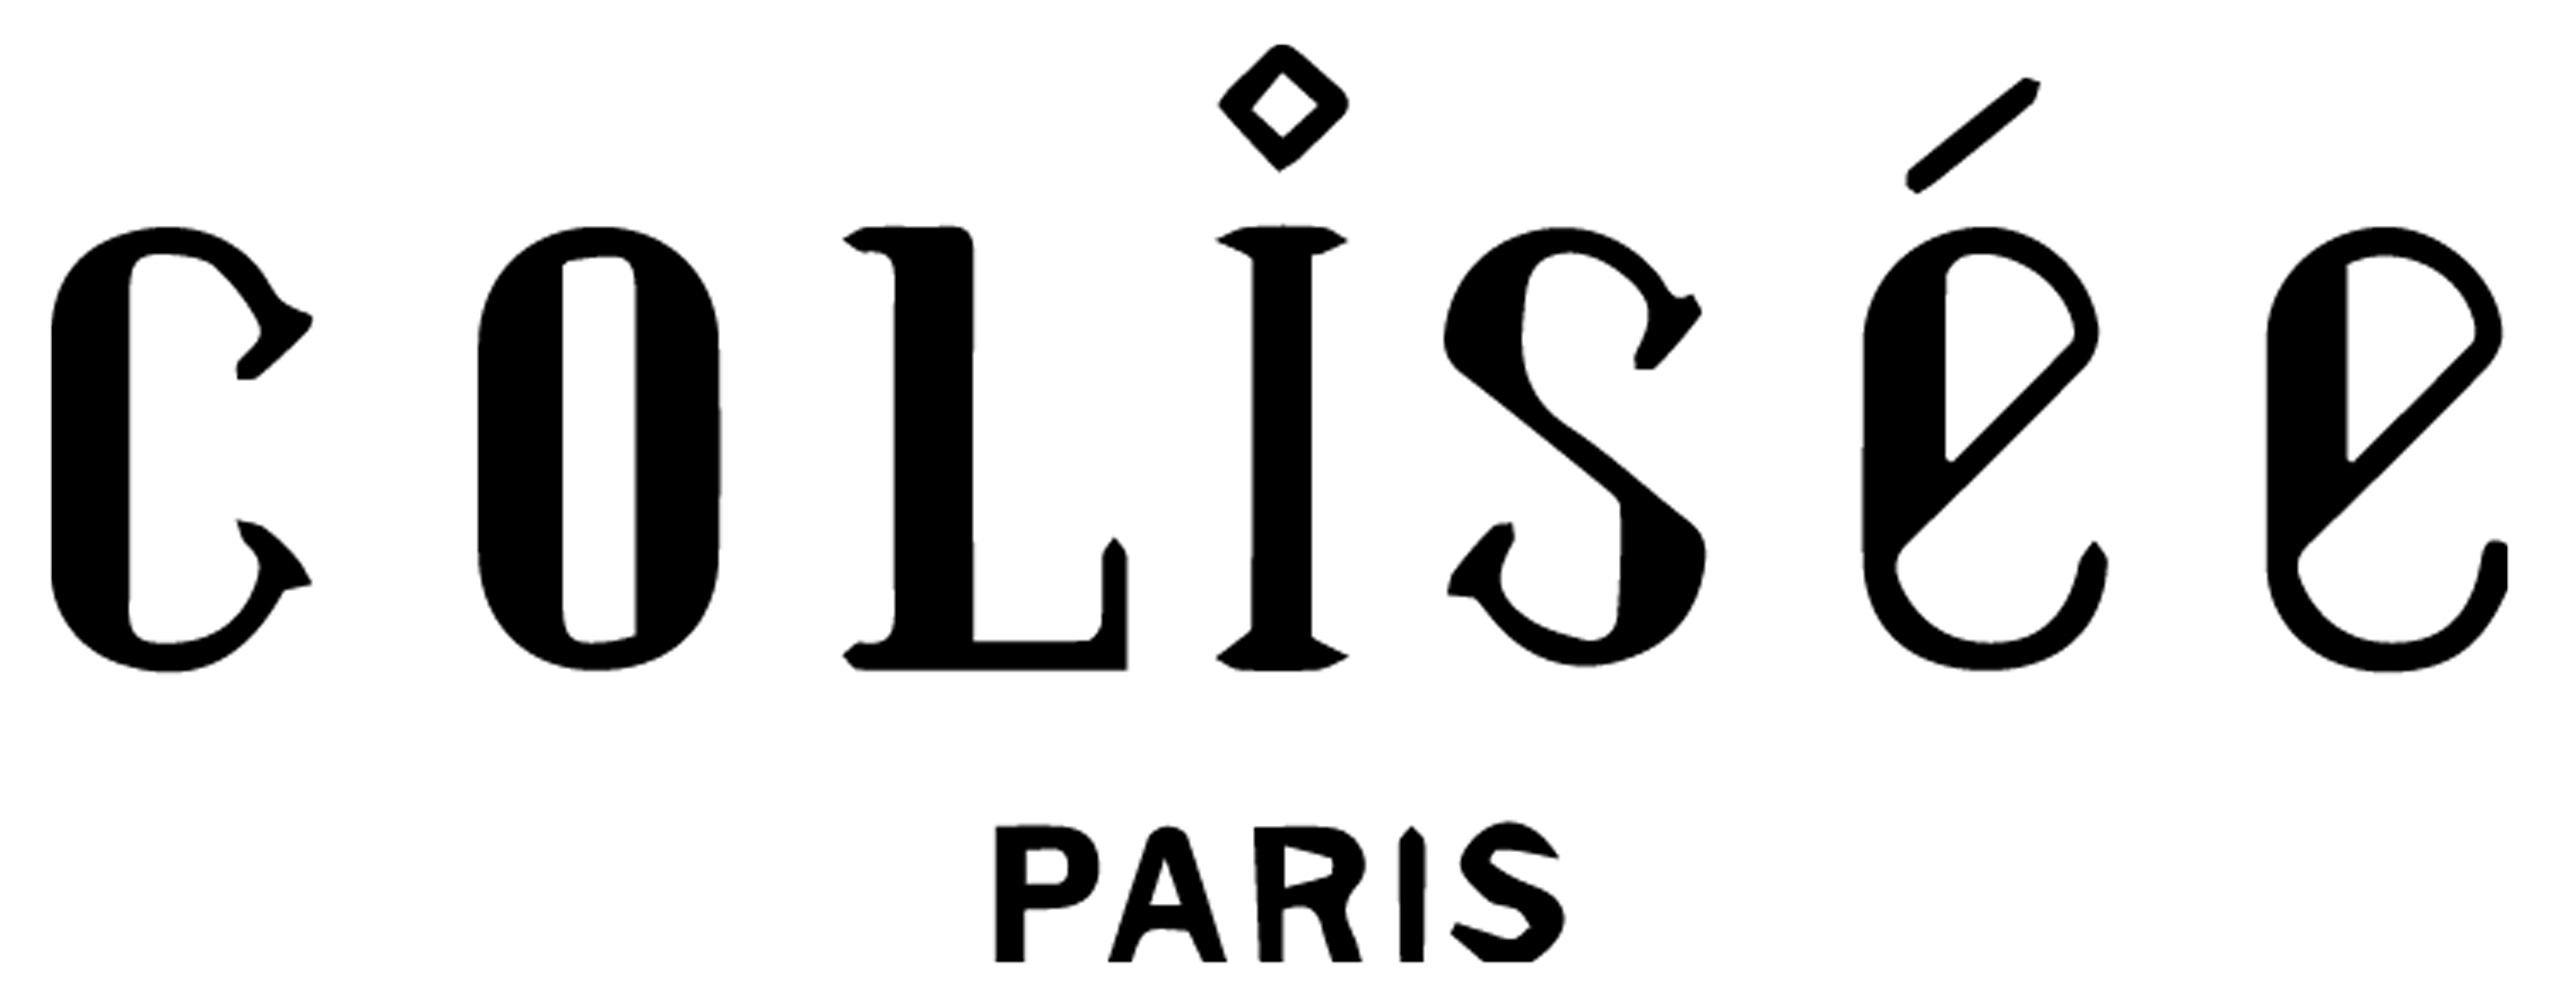 Louis Vuitton Logo png download - 1600*1600 - Free Transparent